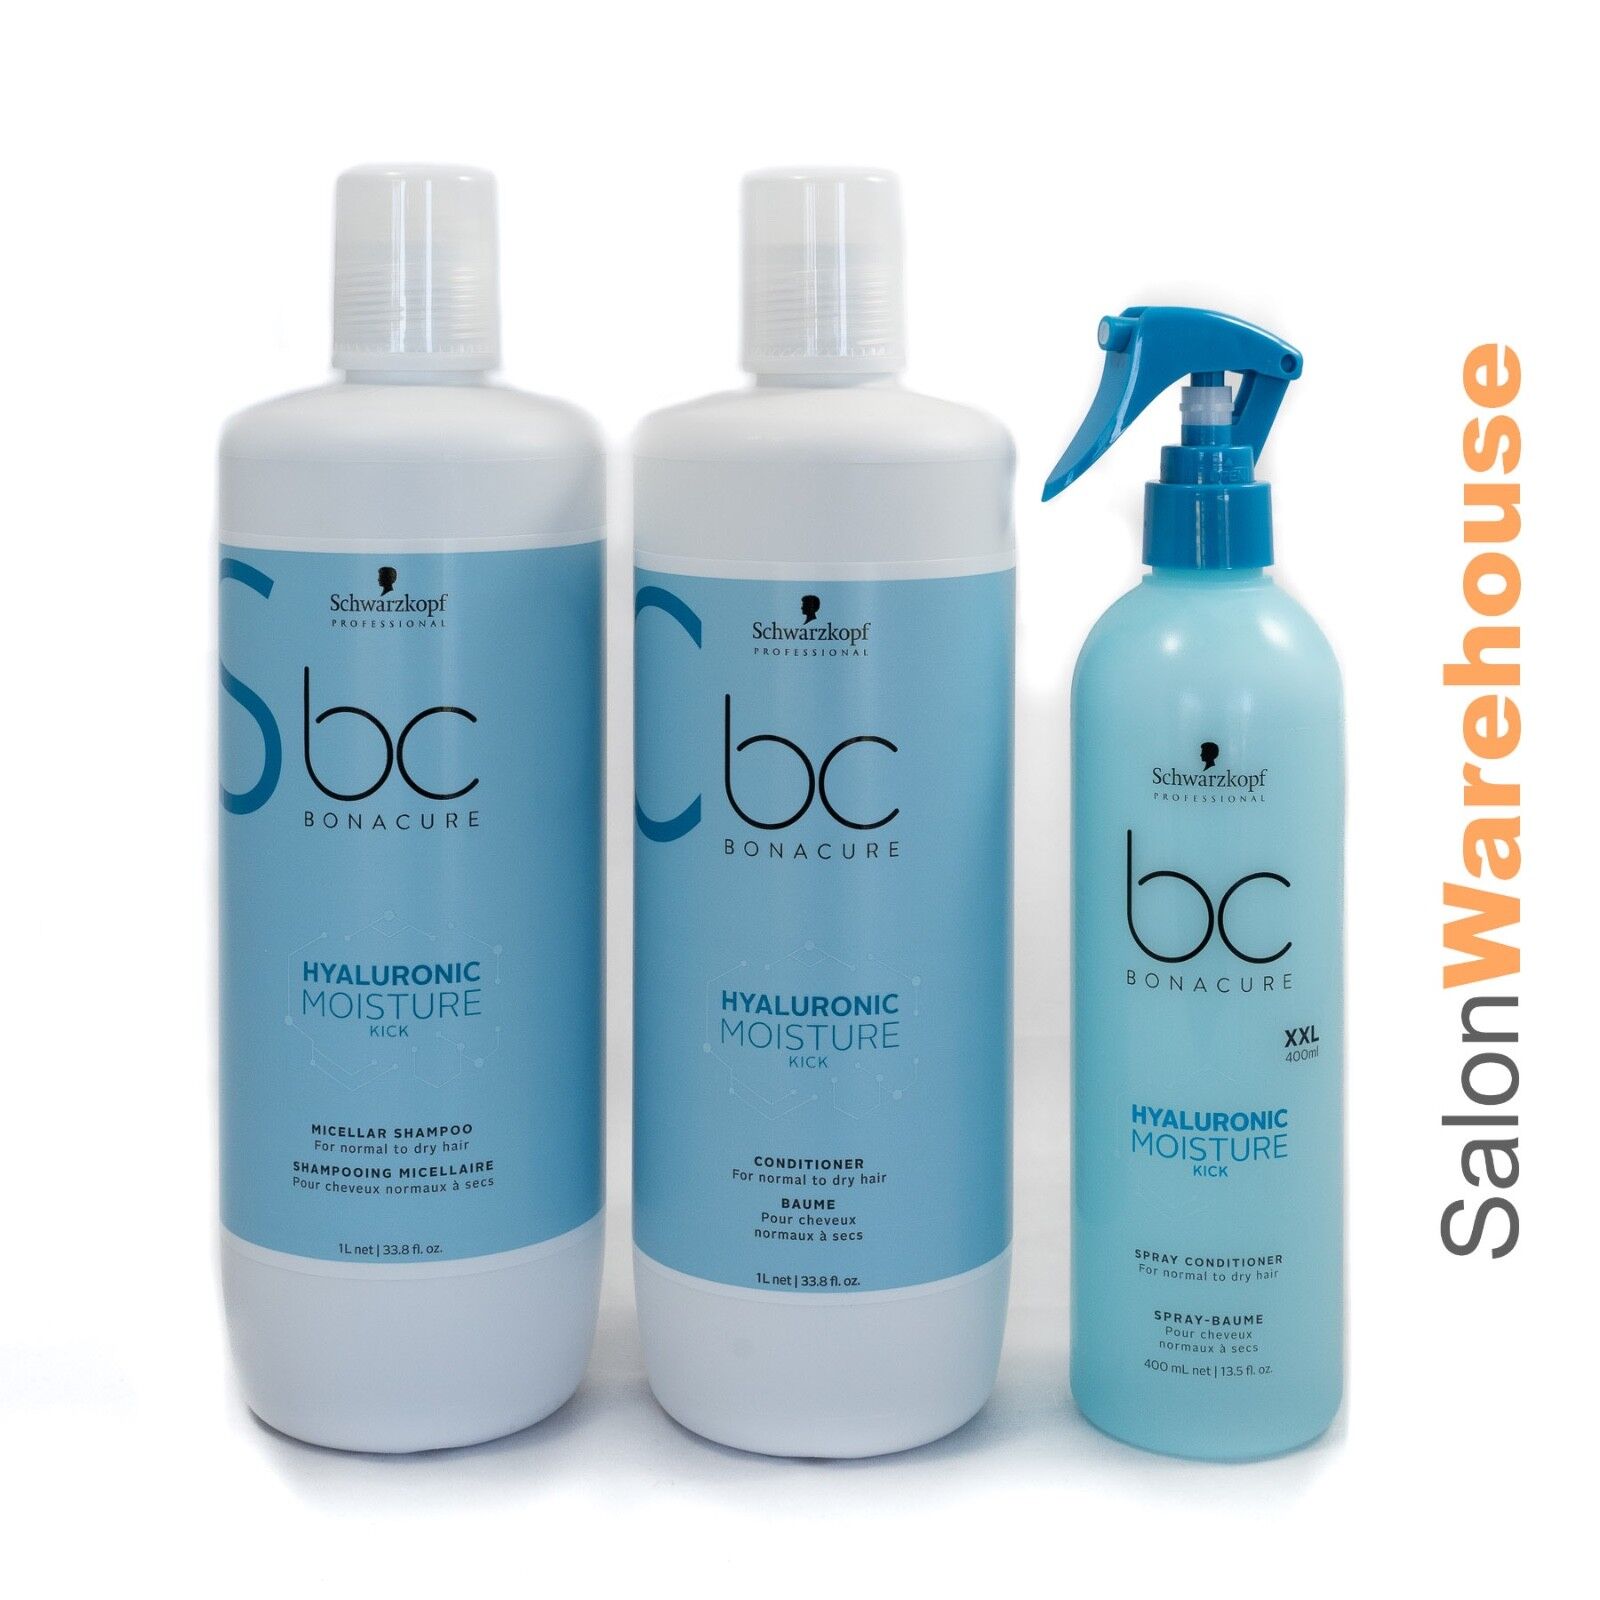 Schwarzkopf BC Bonacure Moisture Kick Shampoo Conditioner + spray 4045787426748 | eBay